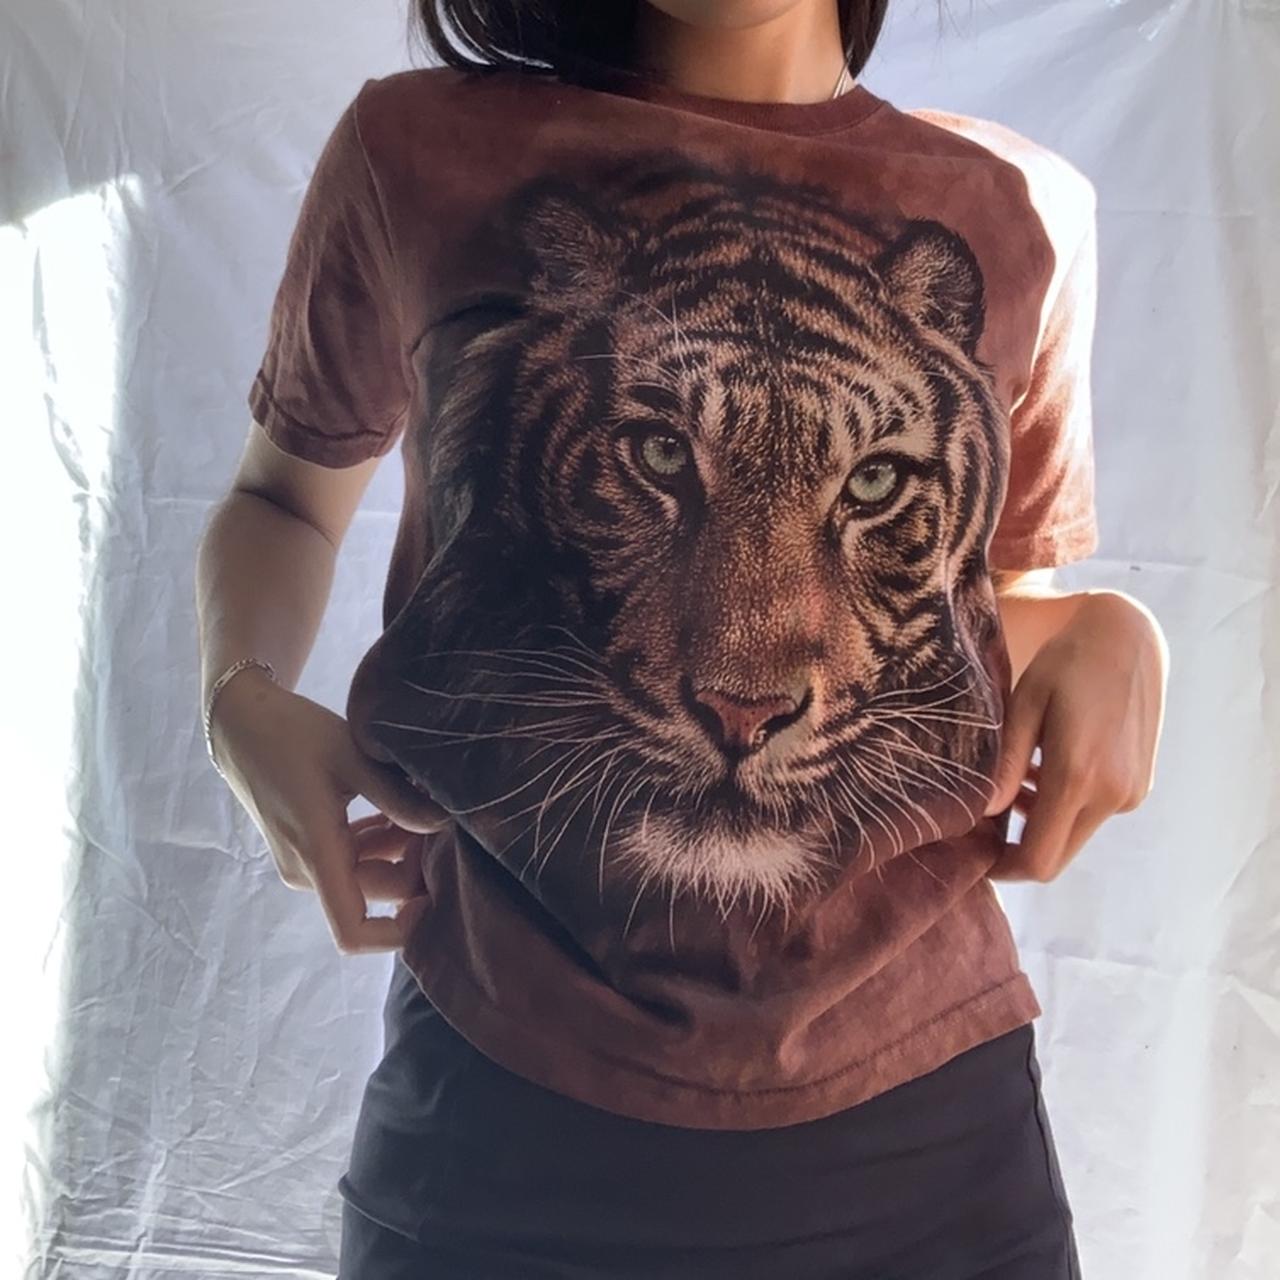 Detroit Tigers T Shirt - Depop